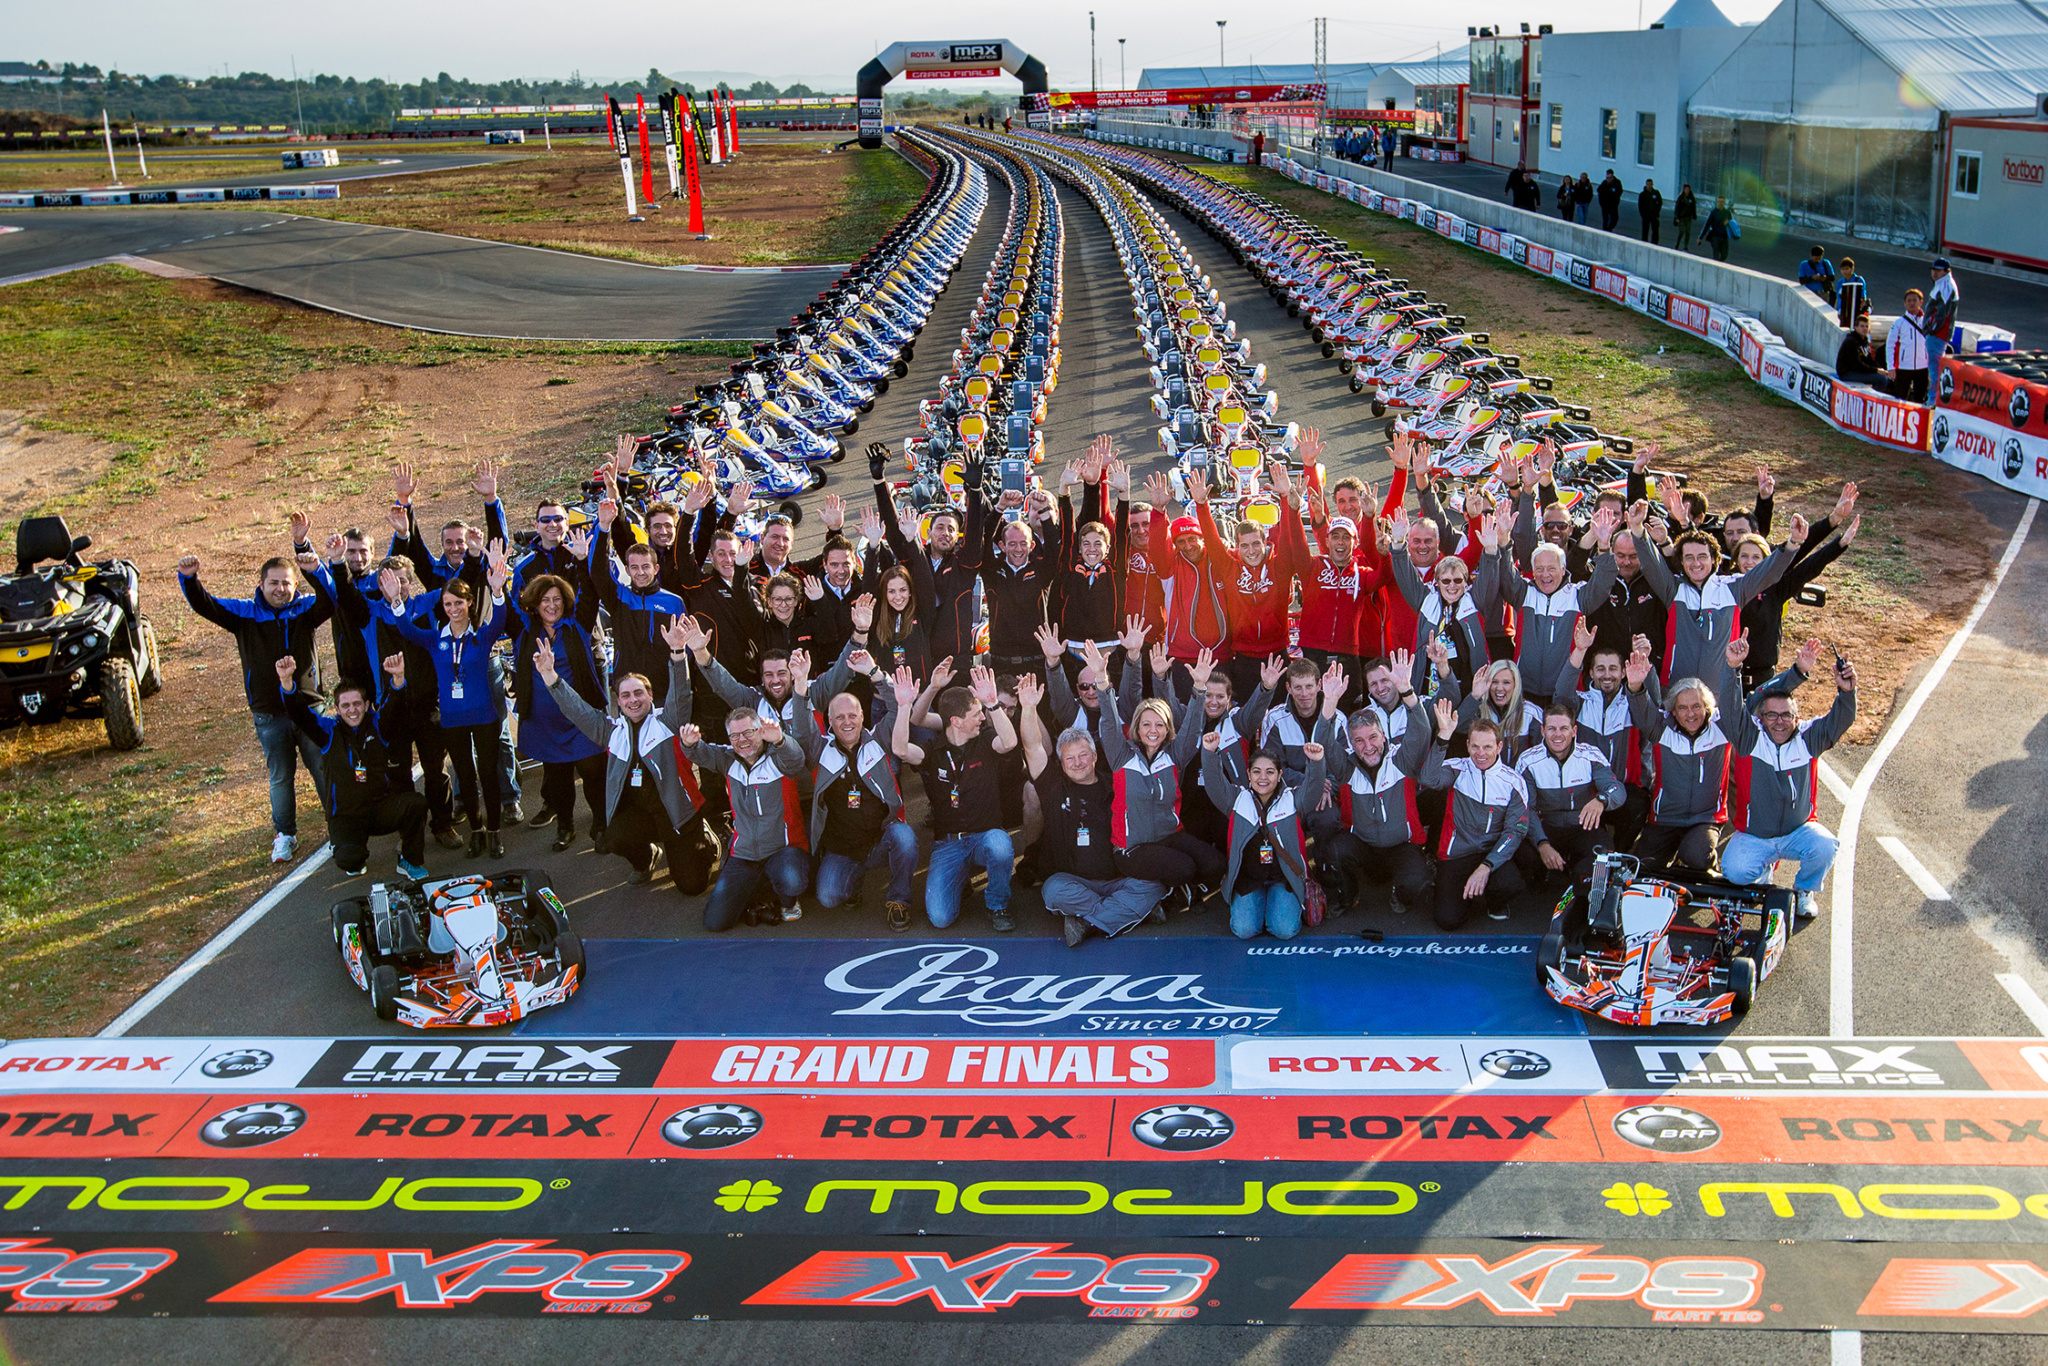 RMC Grand Finals Kart Line-up Spain 2014